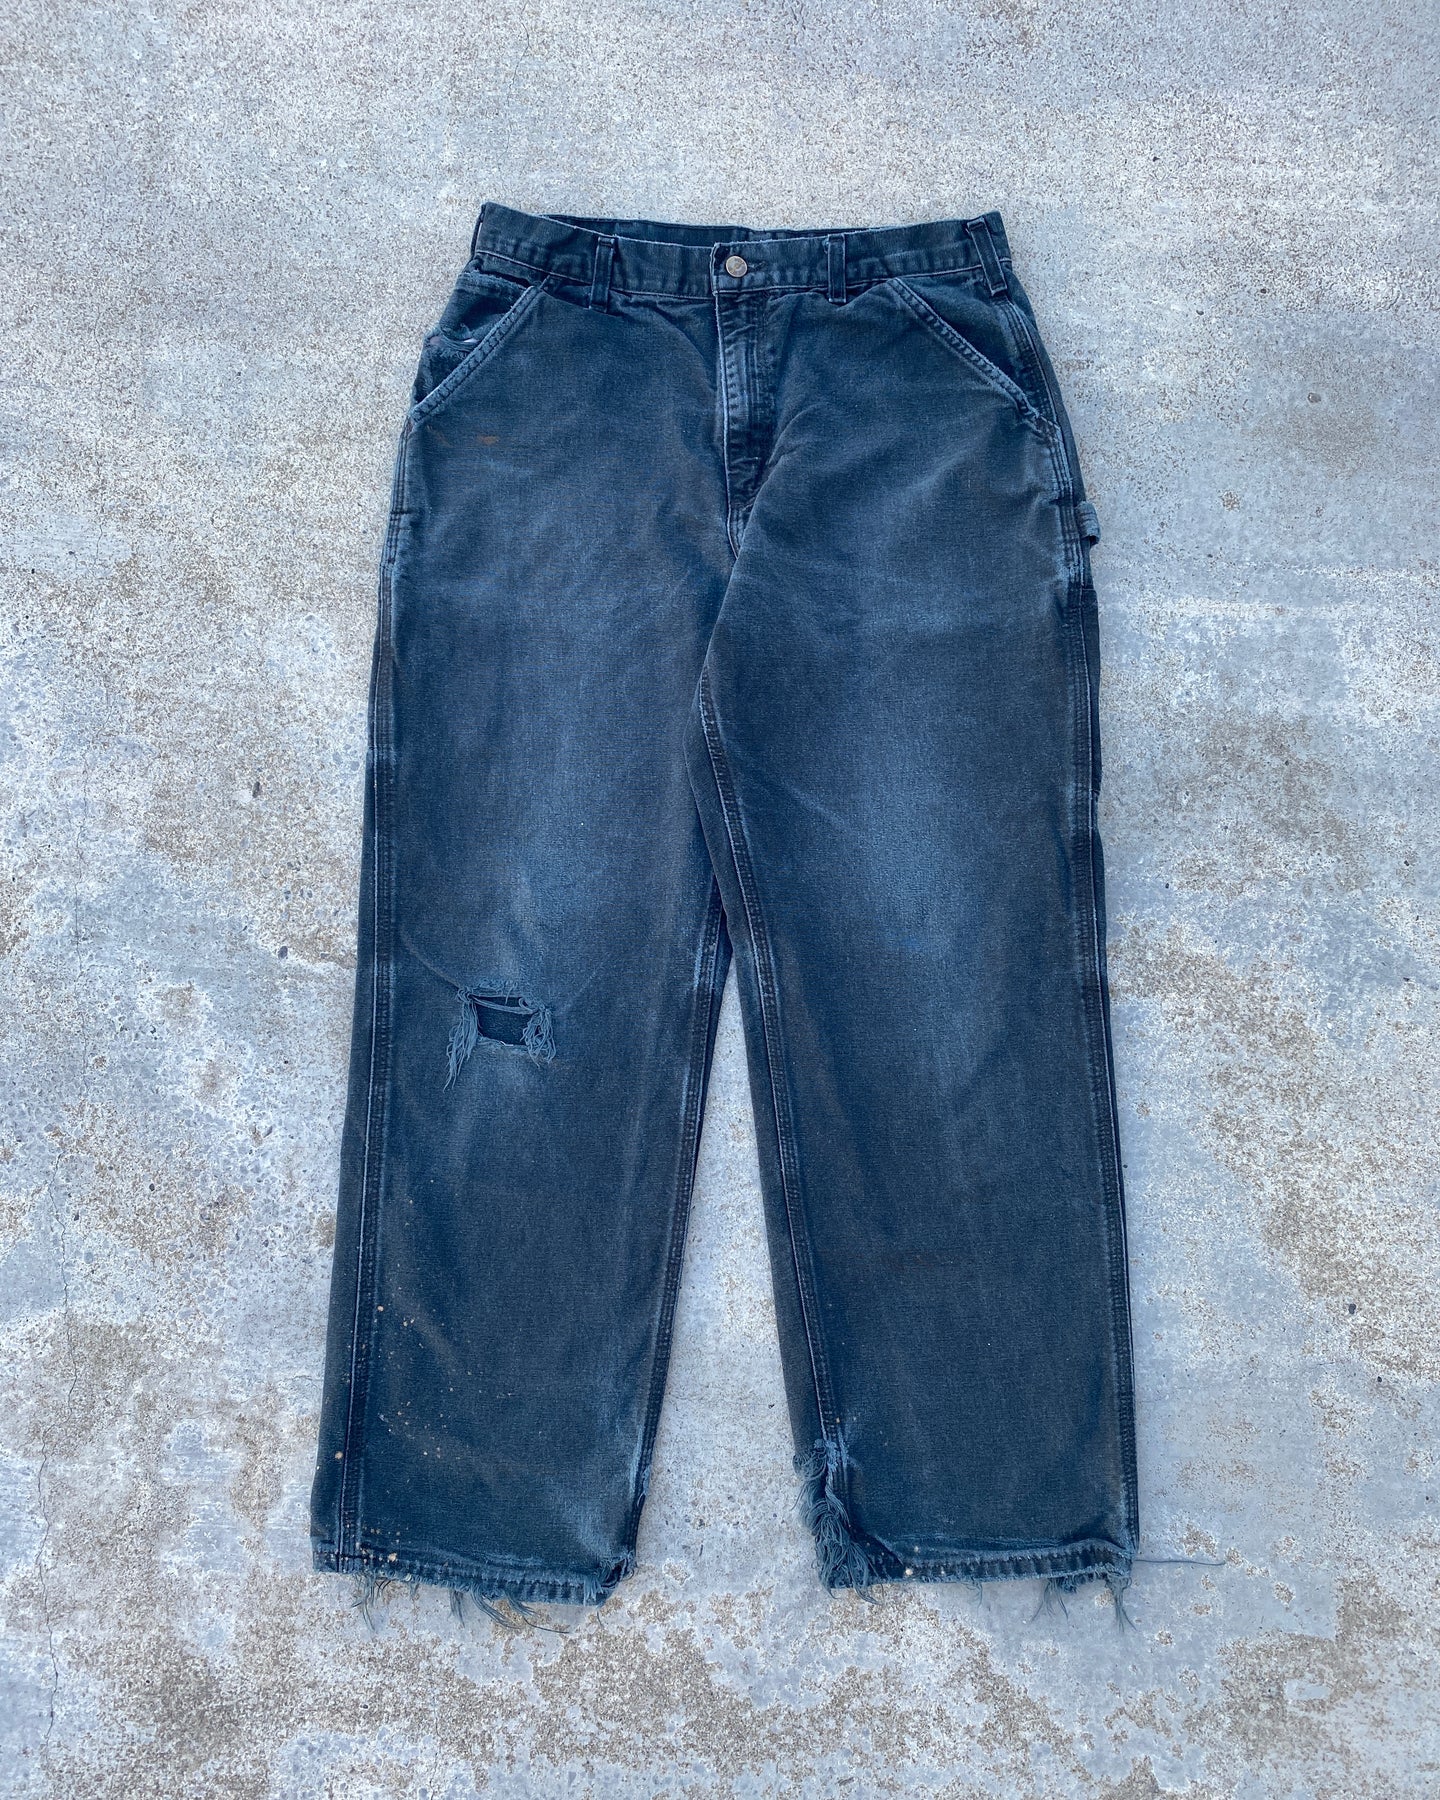 Carhartt Distressed Black Carpenter Pants - Size 33 x 30